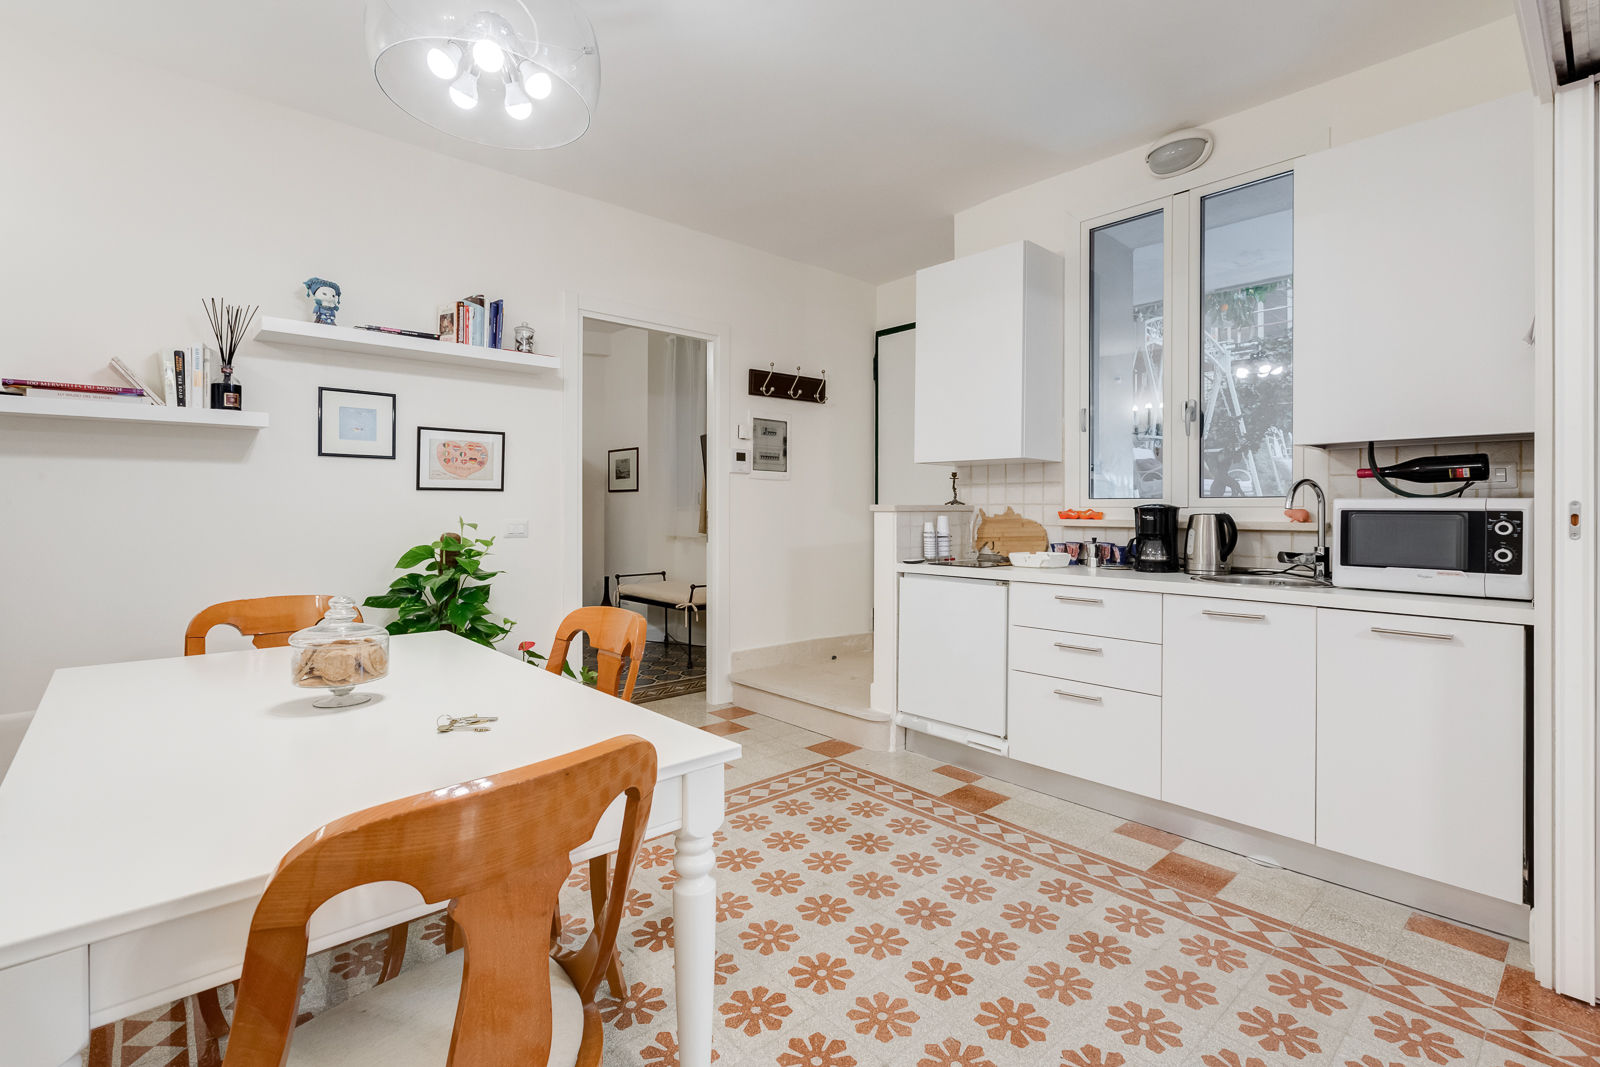 Appartamento Parioli - Roma, Luca Tranquilli - Fotografo Luca Tranquilli - Fotografo Cucina moderna